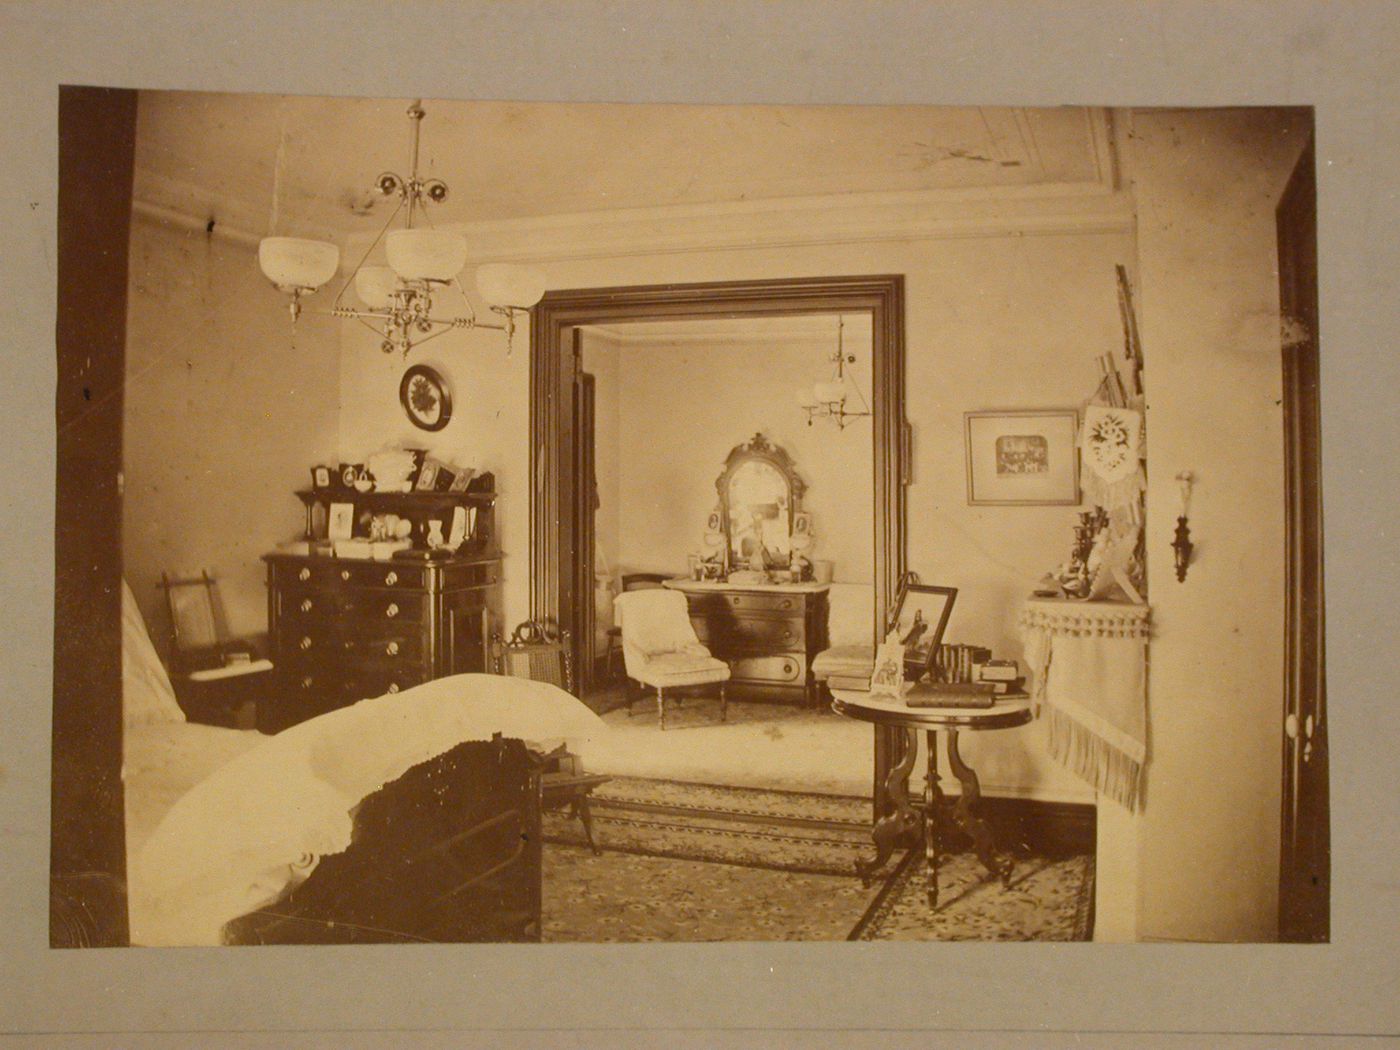 Rozenhof, Residence of S. R. interior looking through bedroom entrance door to a sitting room, Newburgh, New York